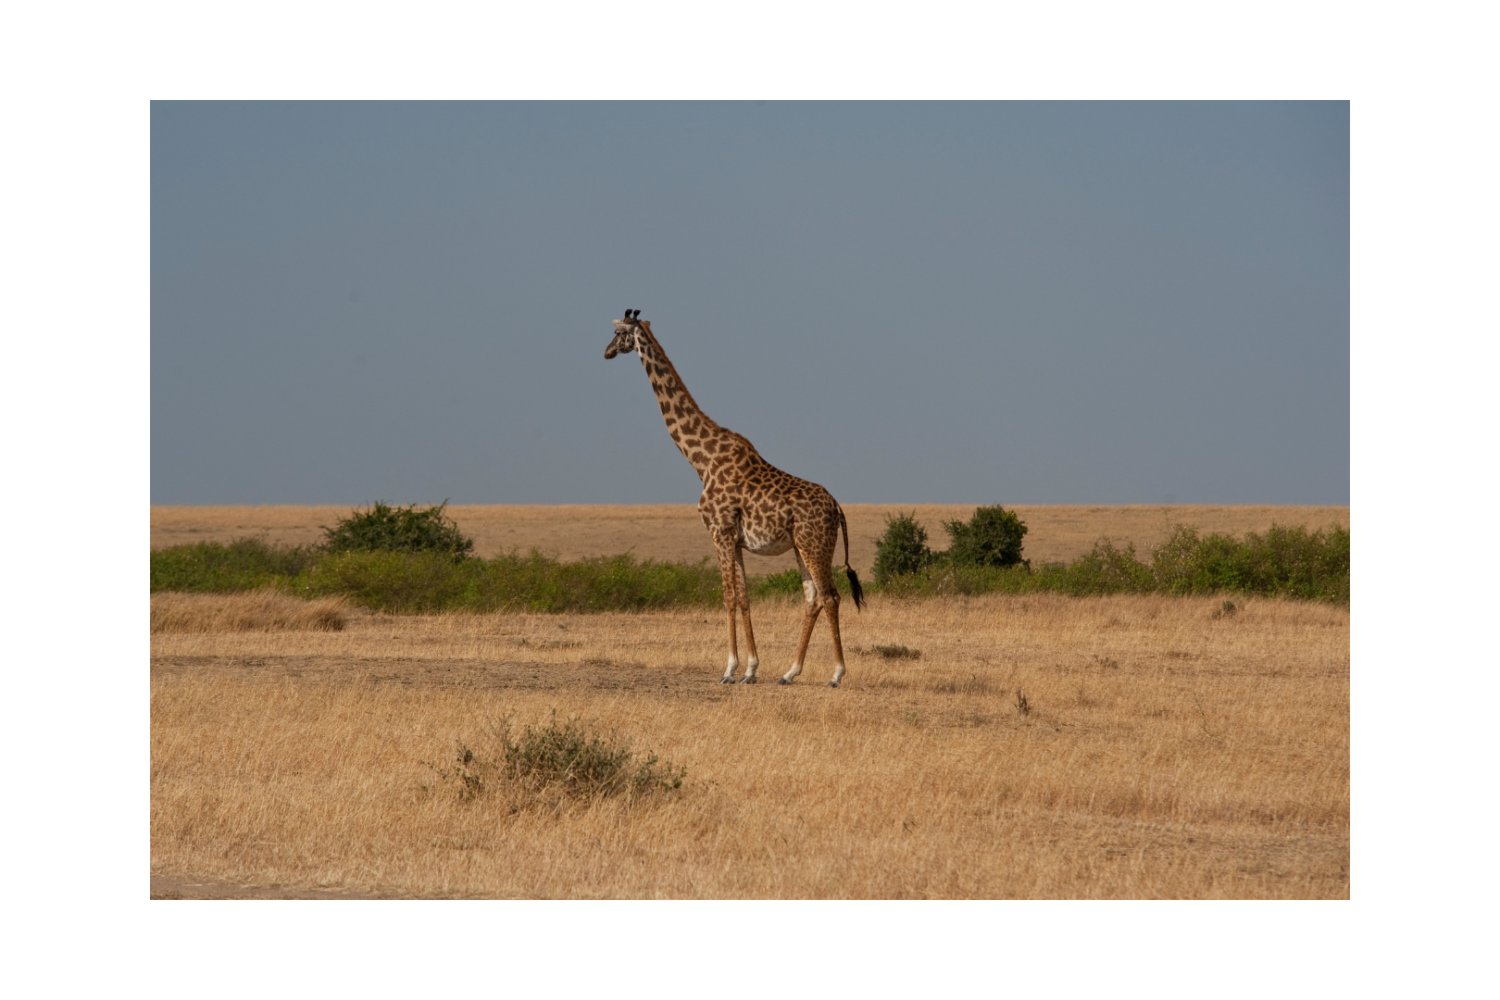 Giraffe in tarangire national park